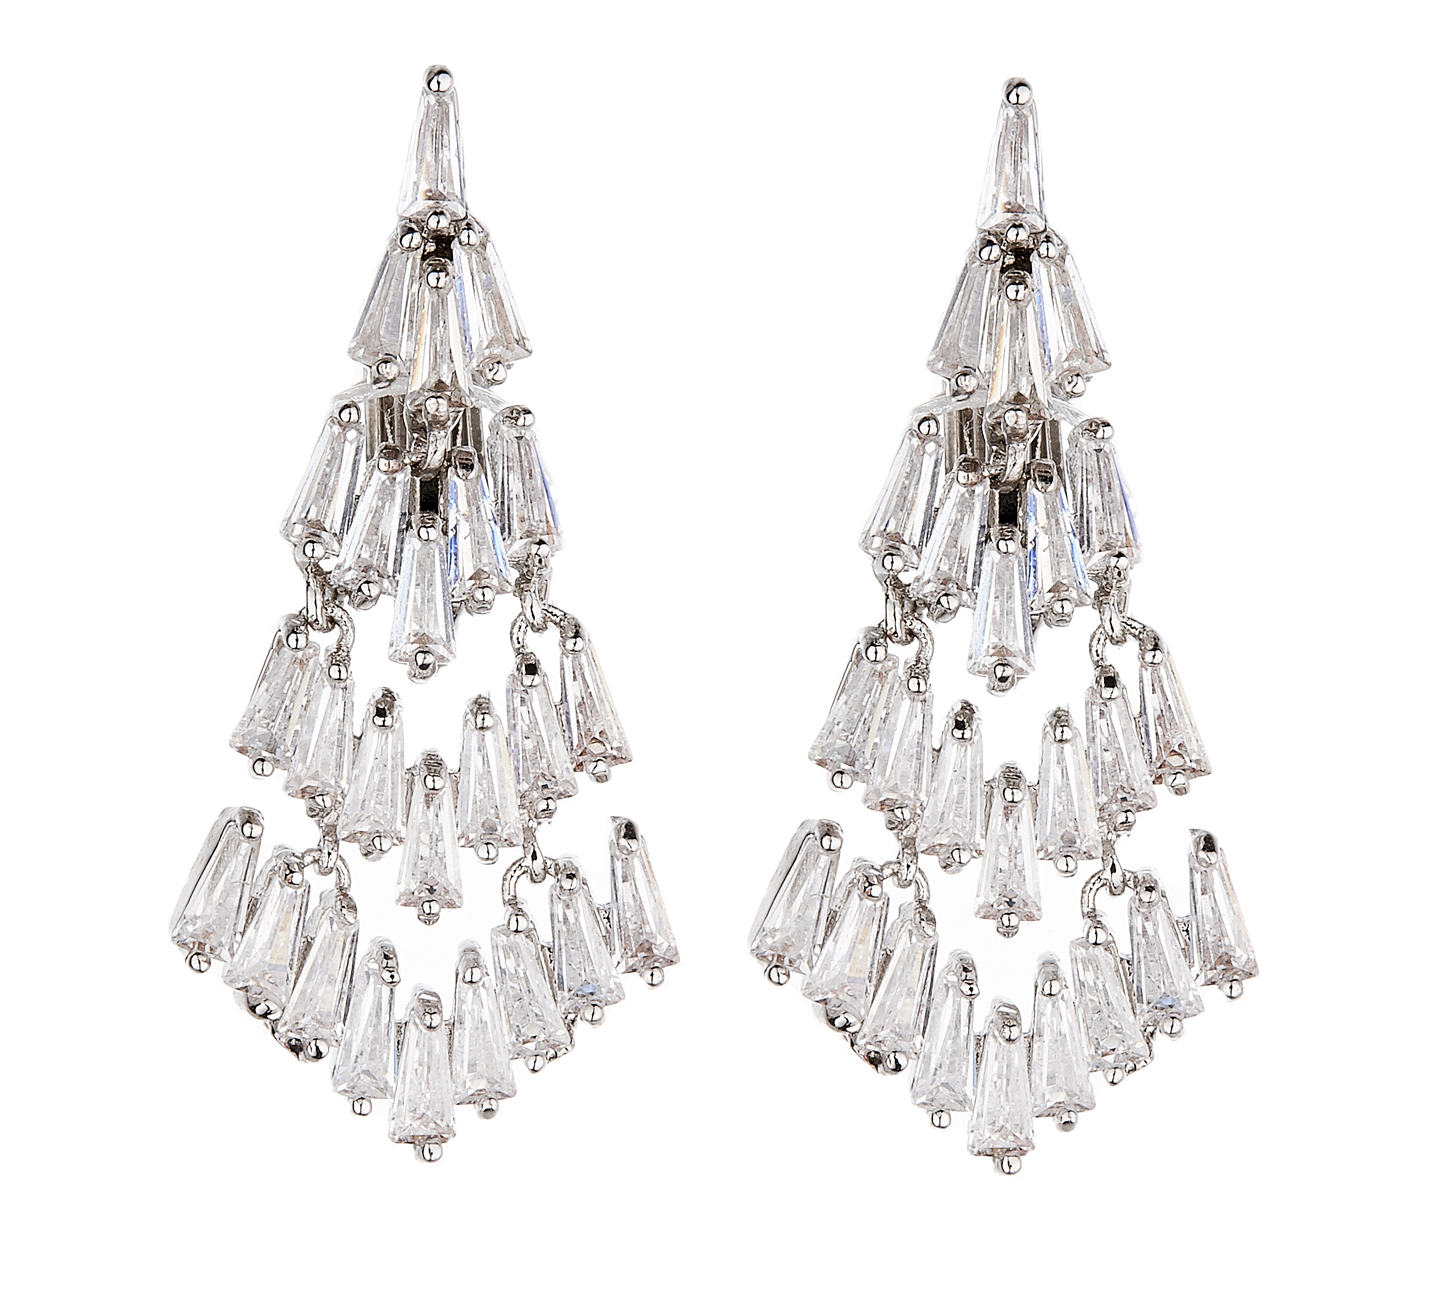 Clip On Earrings - Naki - silver luxury drop earring with cubic zirconia stones